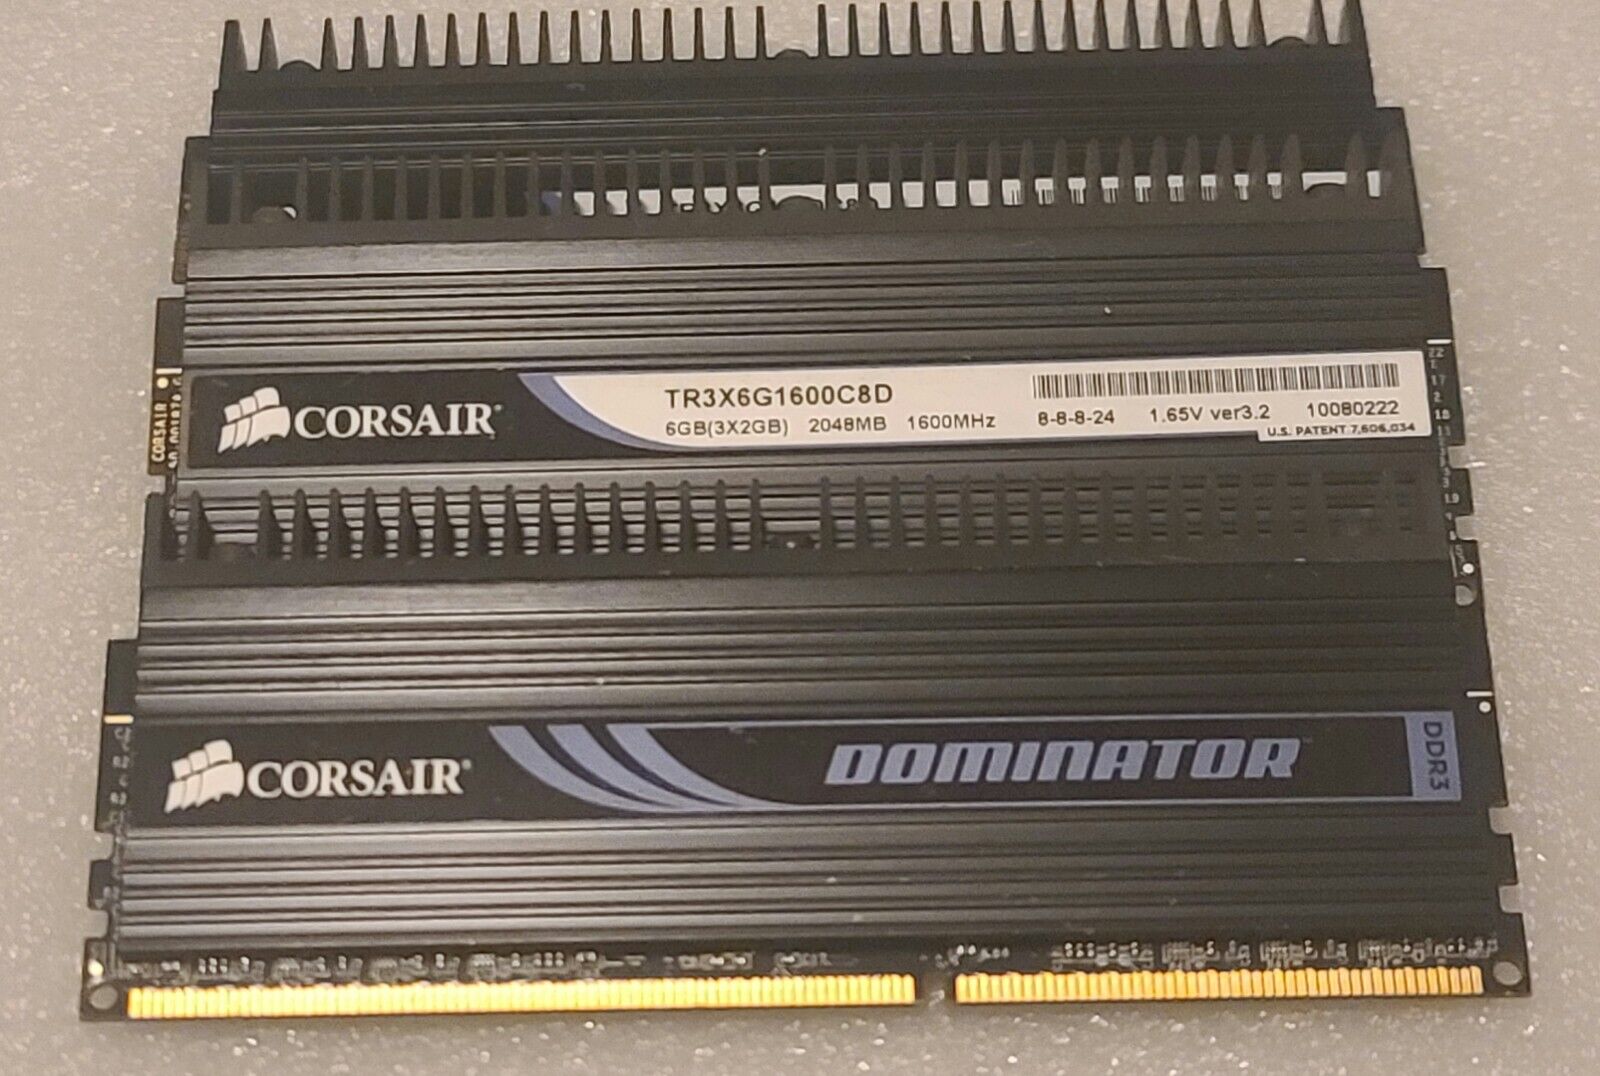 Corsair 6GB DDR3 (3x2gb) 1600MHZ Dominator Tr3x6g1600c8d Desktop Gaming Memory